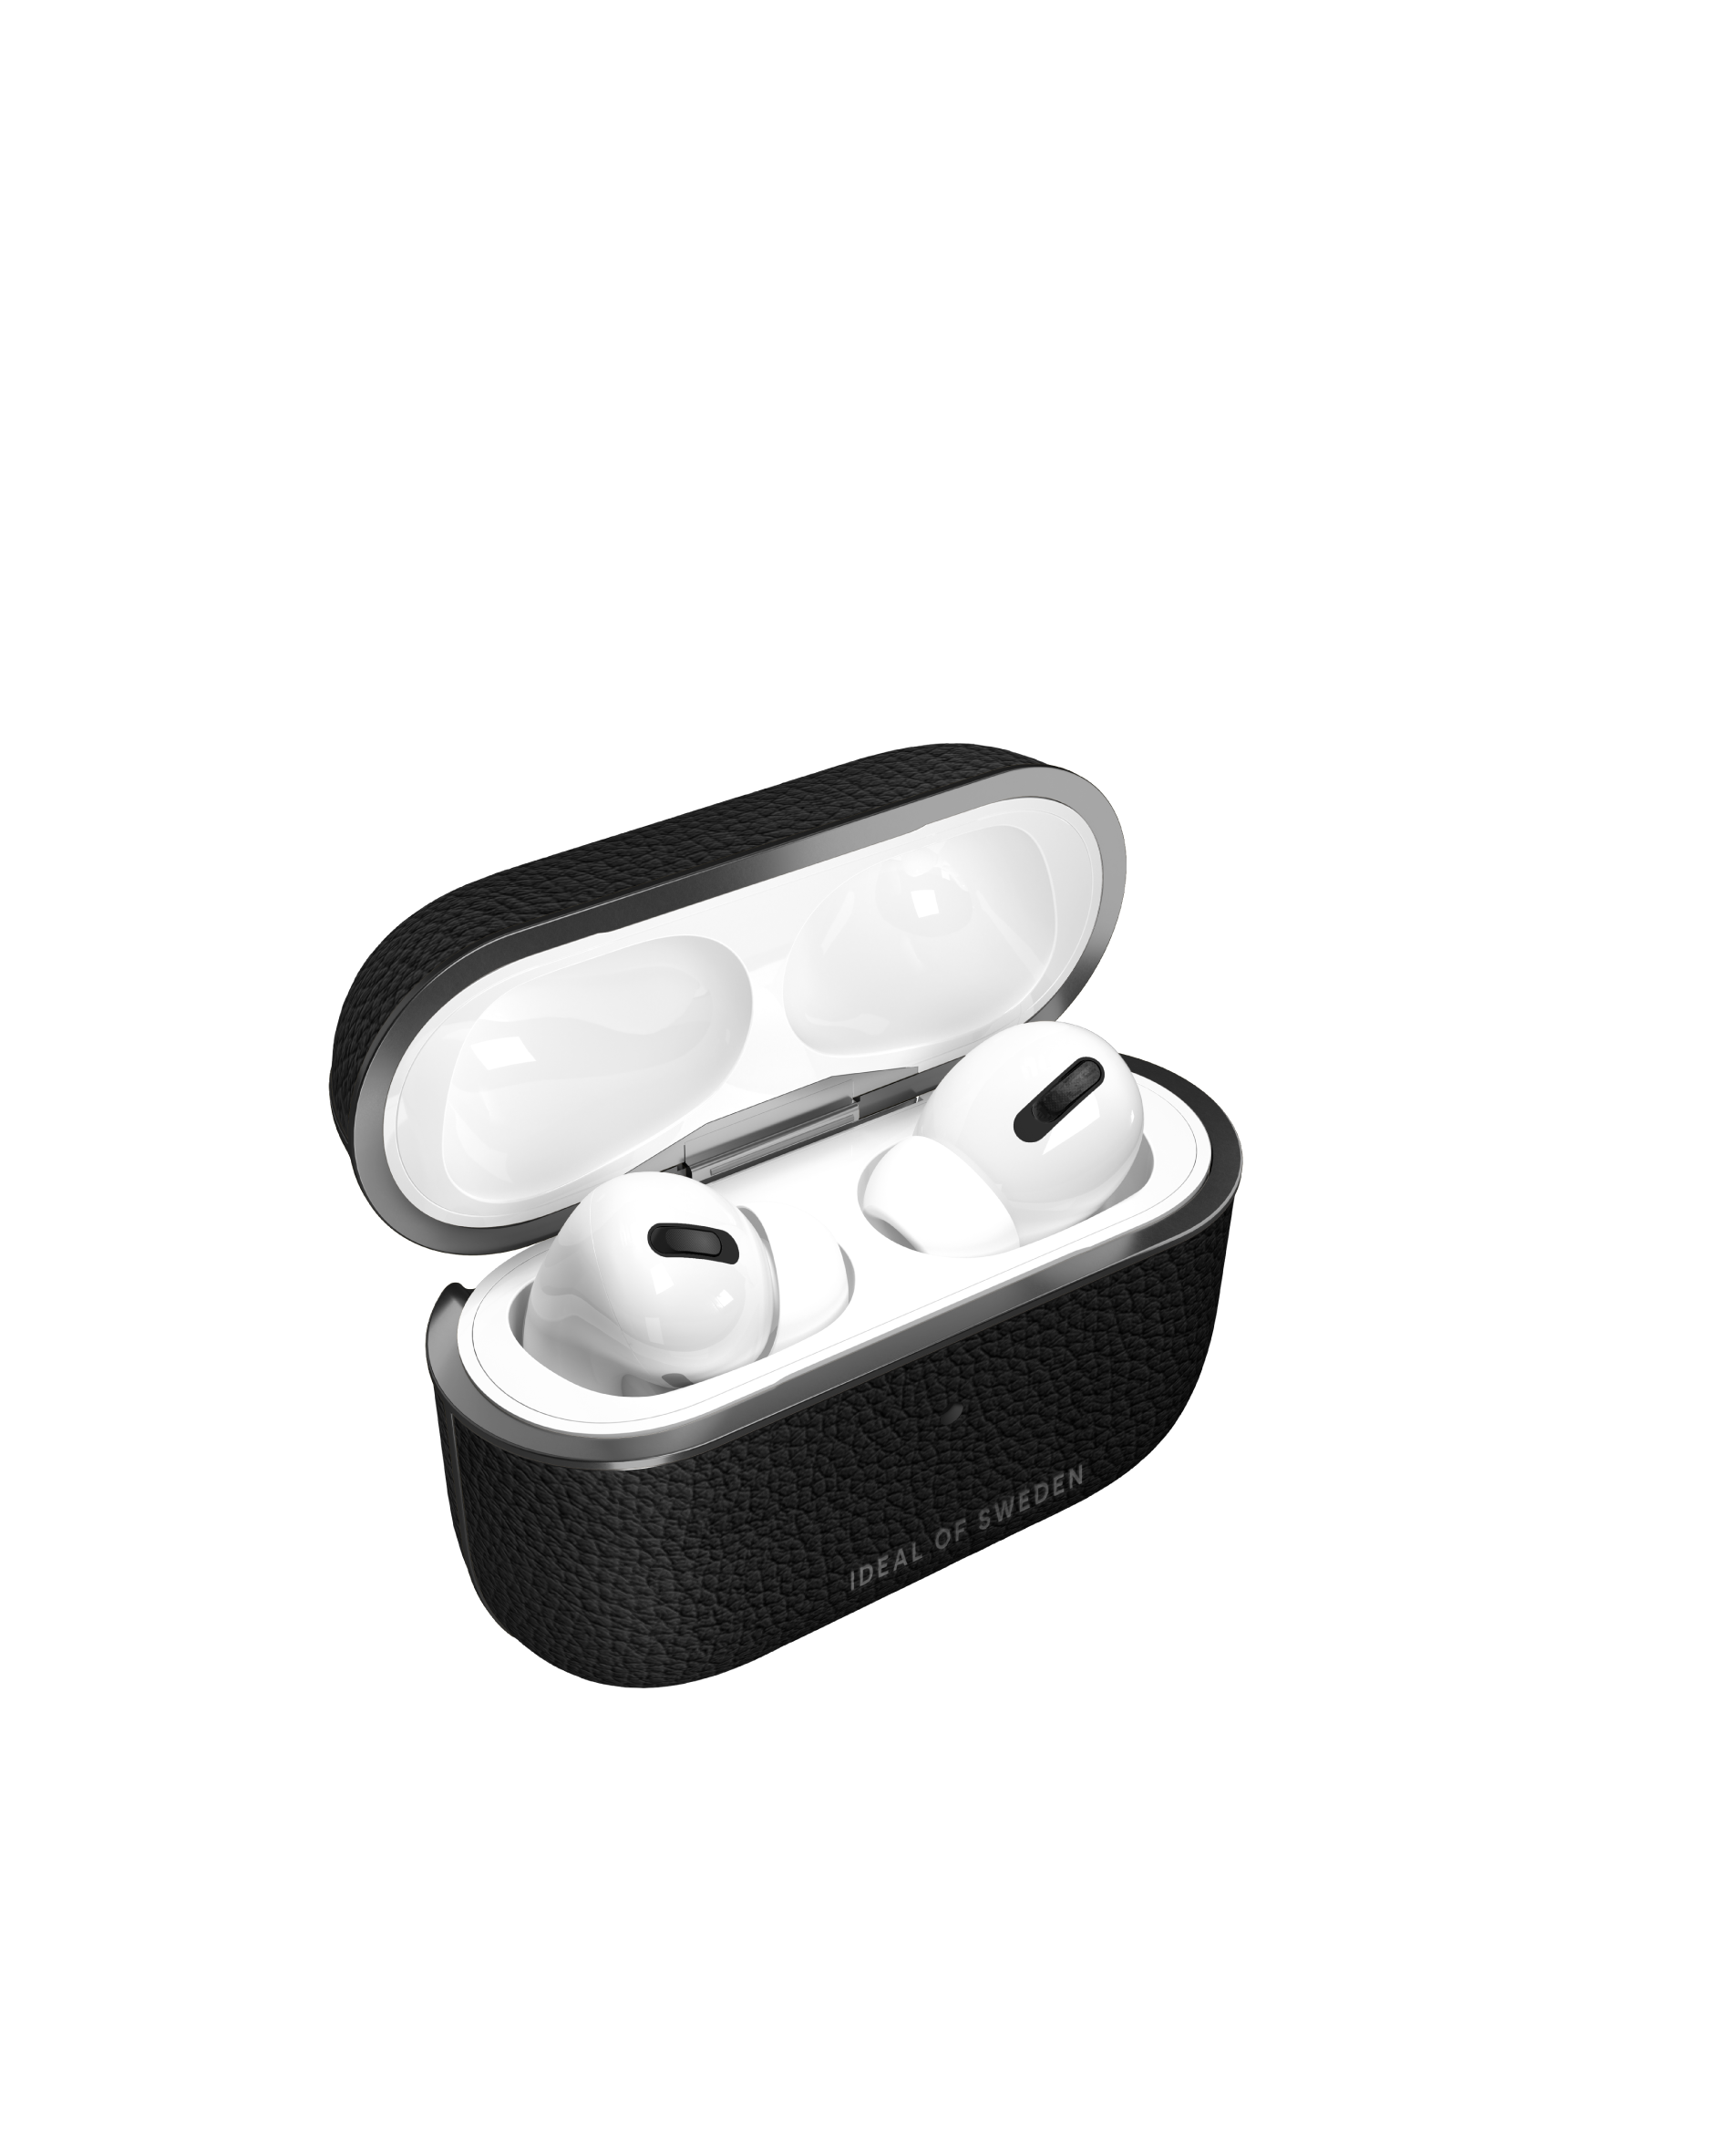 IDEAL Onyx Black Khaki OF SWEDEN Apple passend IDAPCAW21-PRO-362 für: Schutzhülle